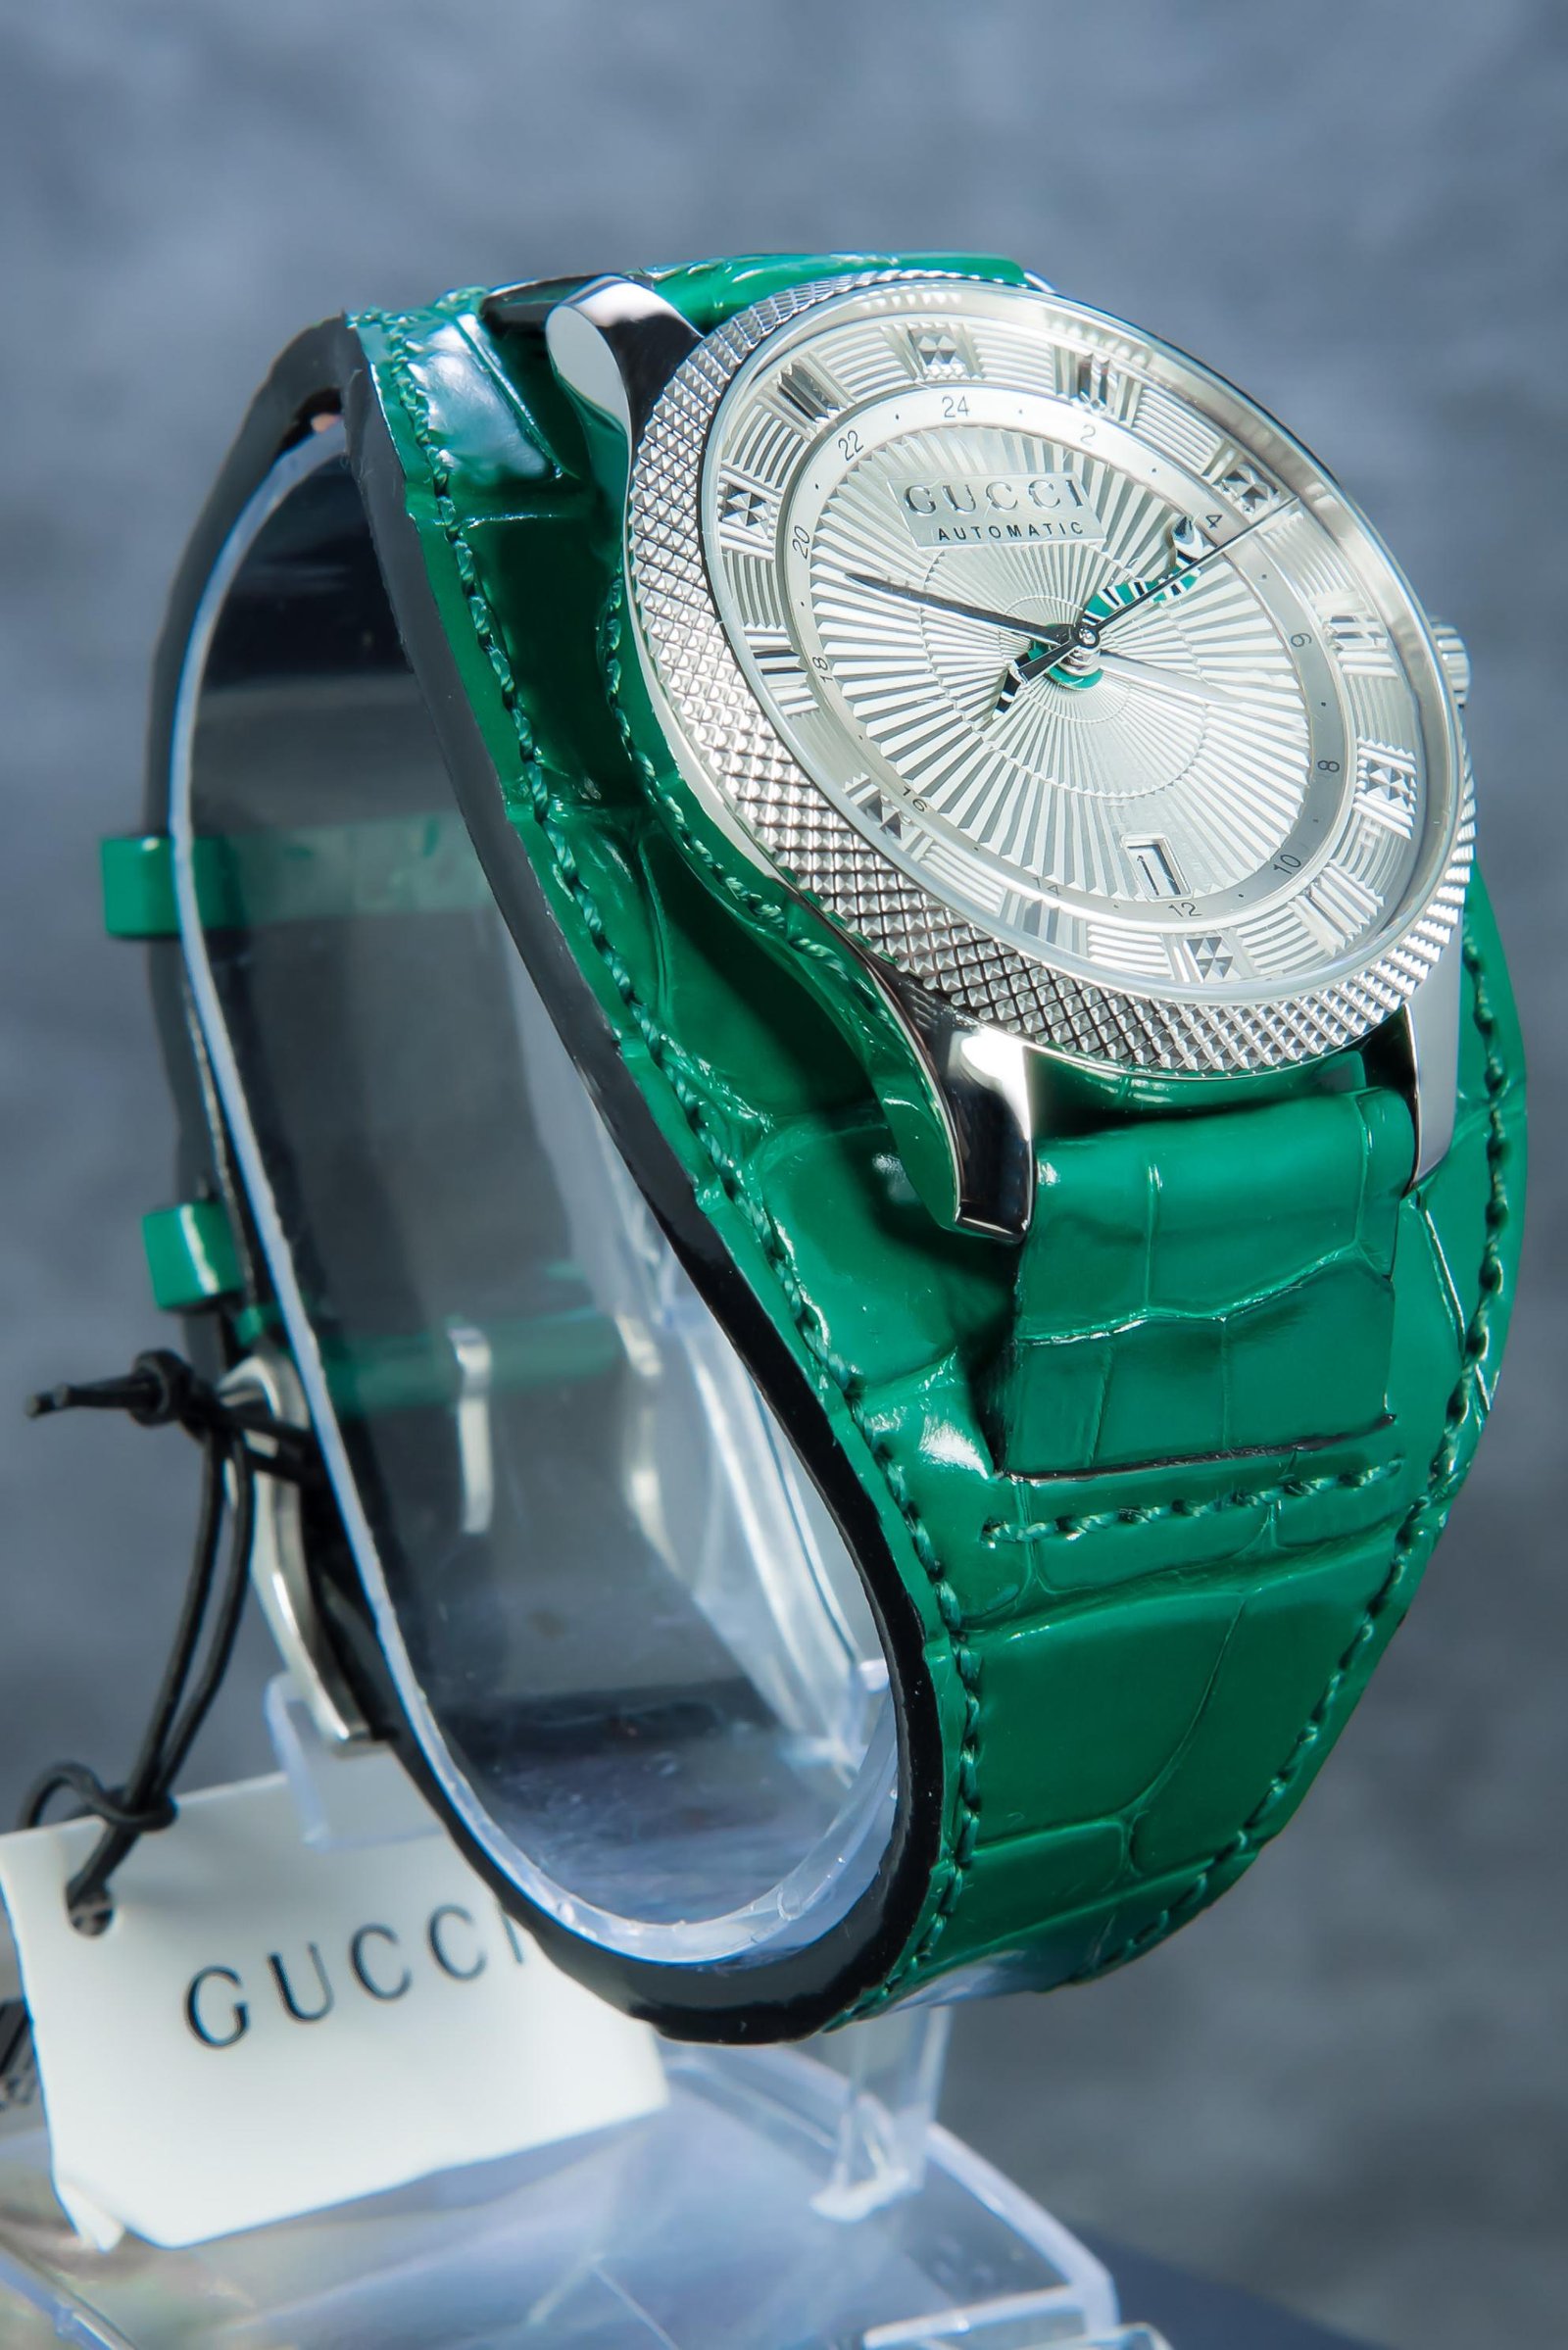 Gucci Eryx Watch Emerald Green Collection 2018 Art Deco Design | Pawn ...